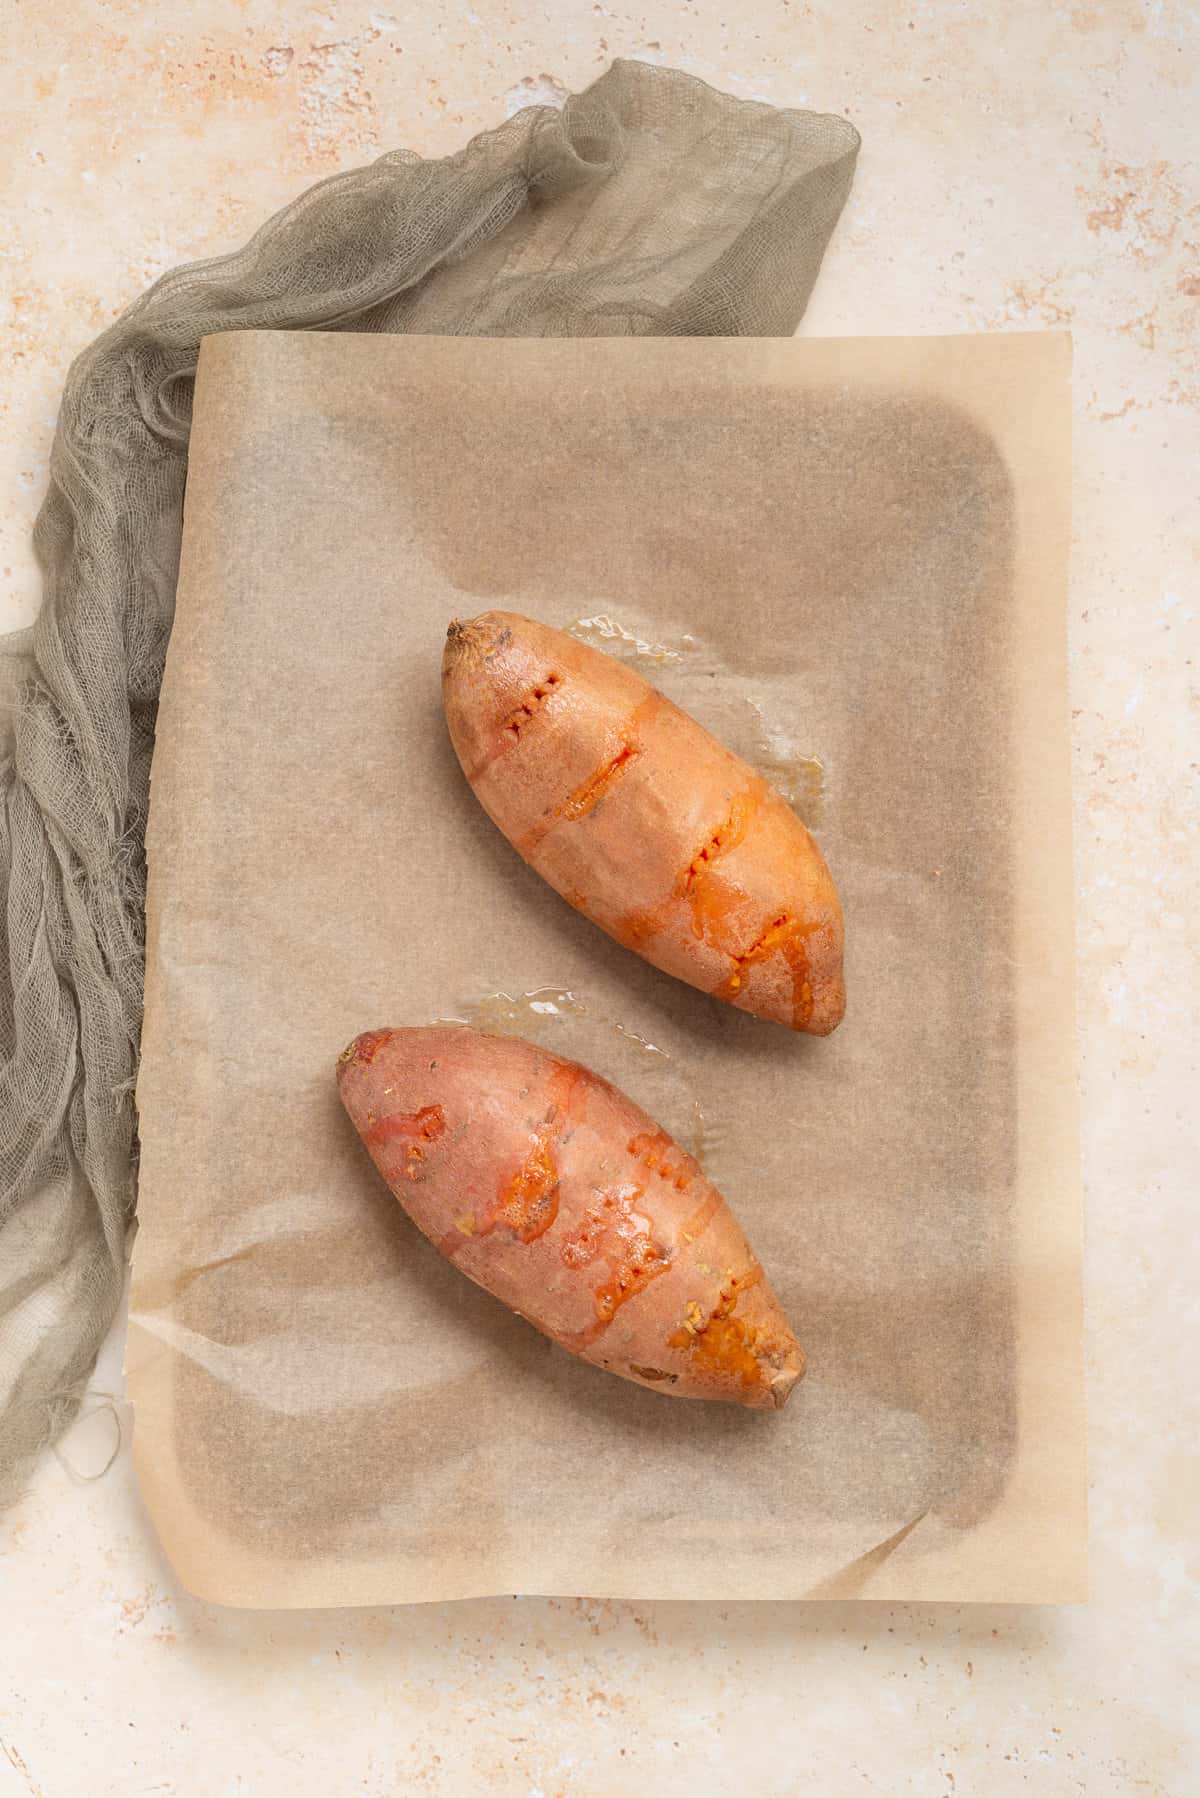 An image of pierced sweet potatoes in a large baking sheet.